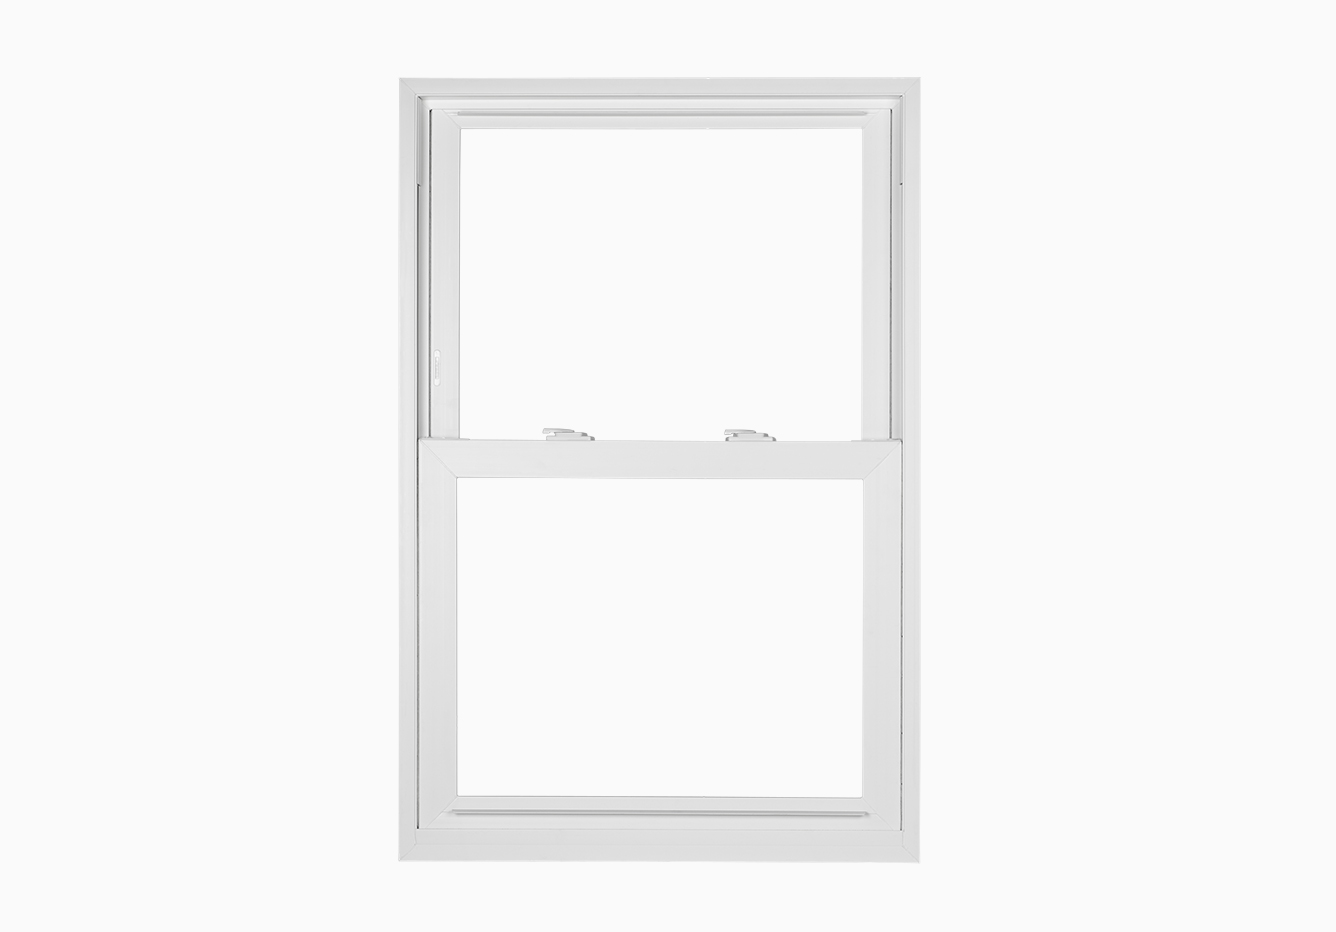 Residential USA House Black Aluminum Single Double Hung Window